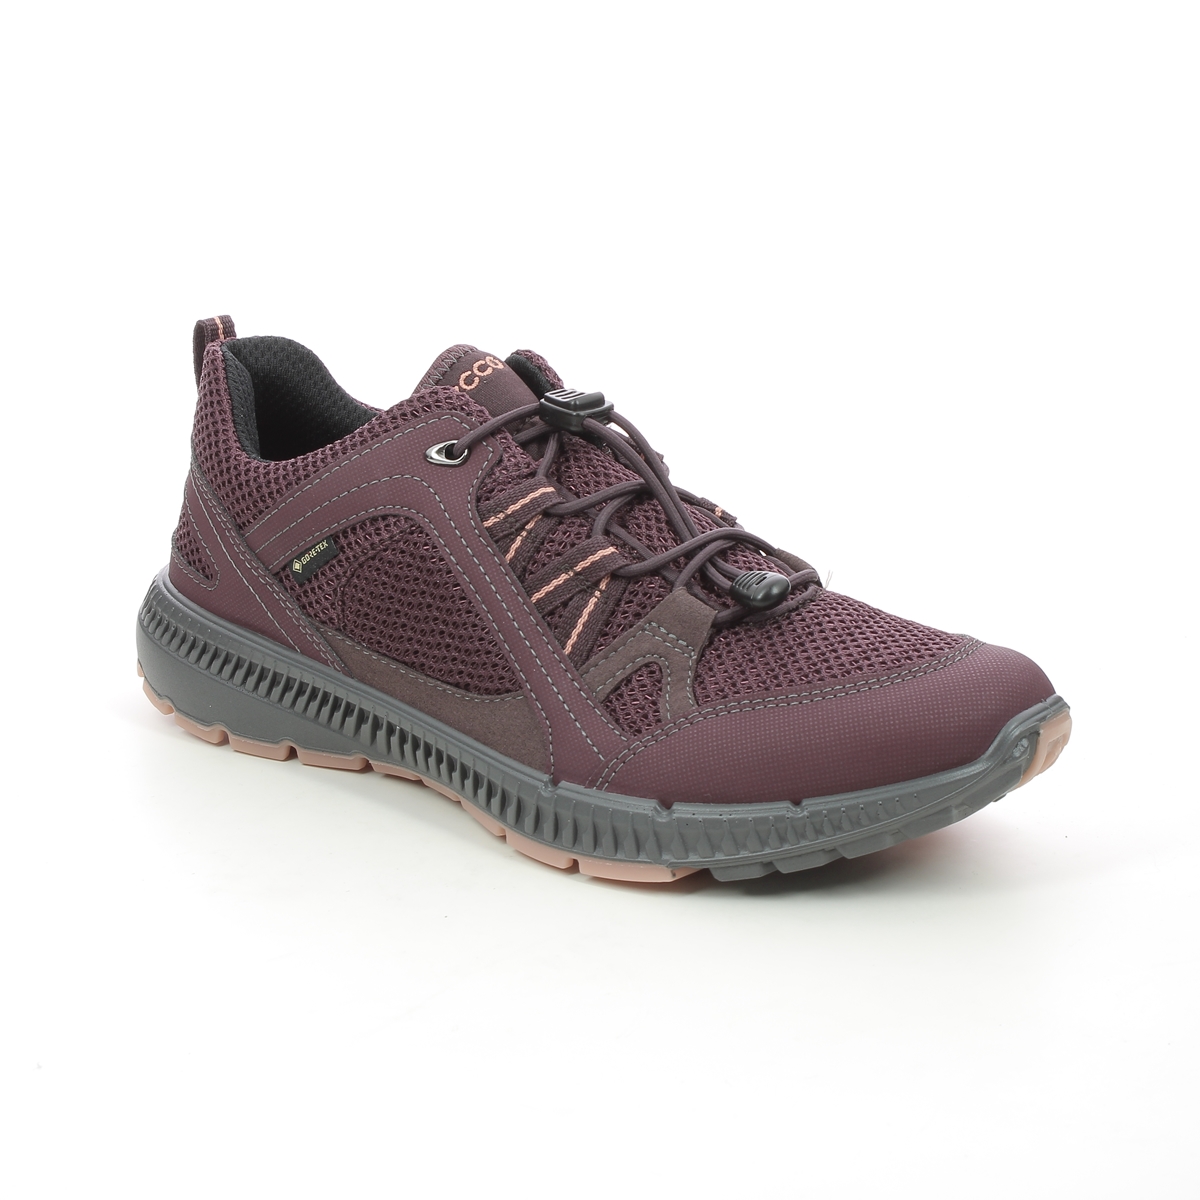 Terracruise Gtx 843063-51502 Walking Shoes